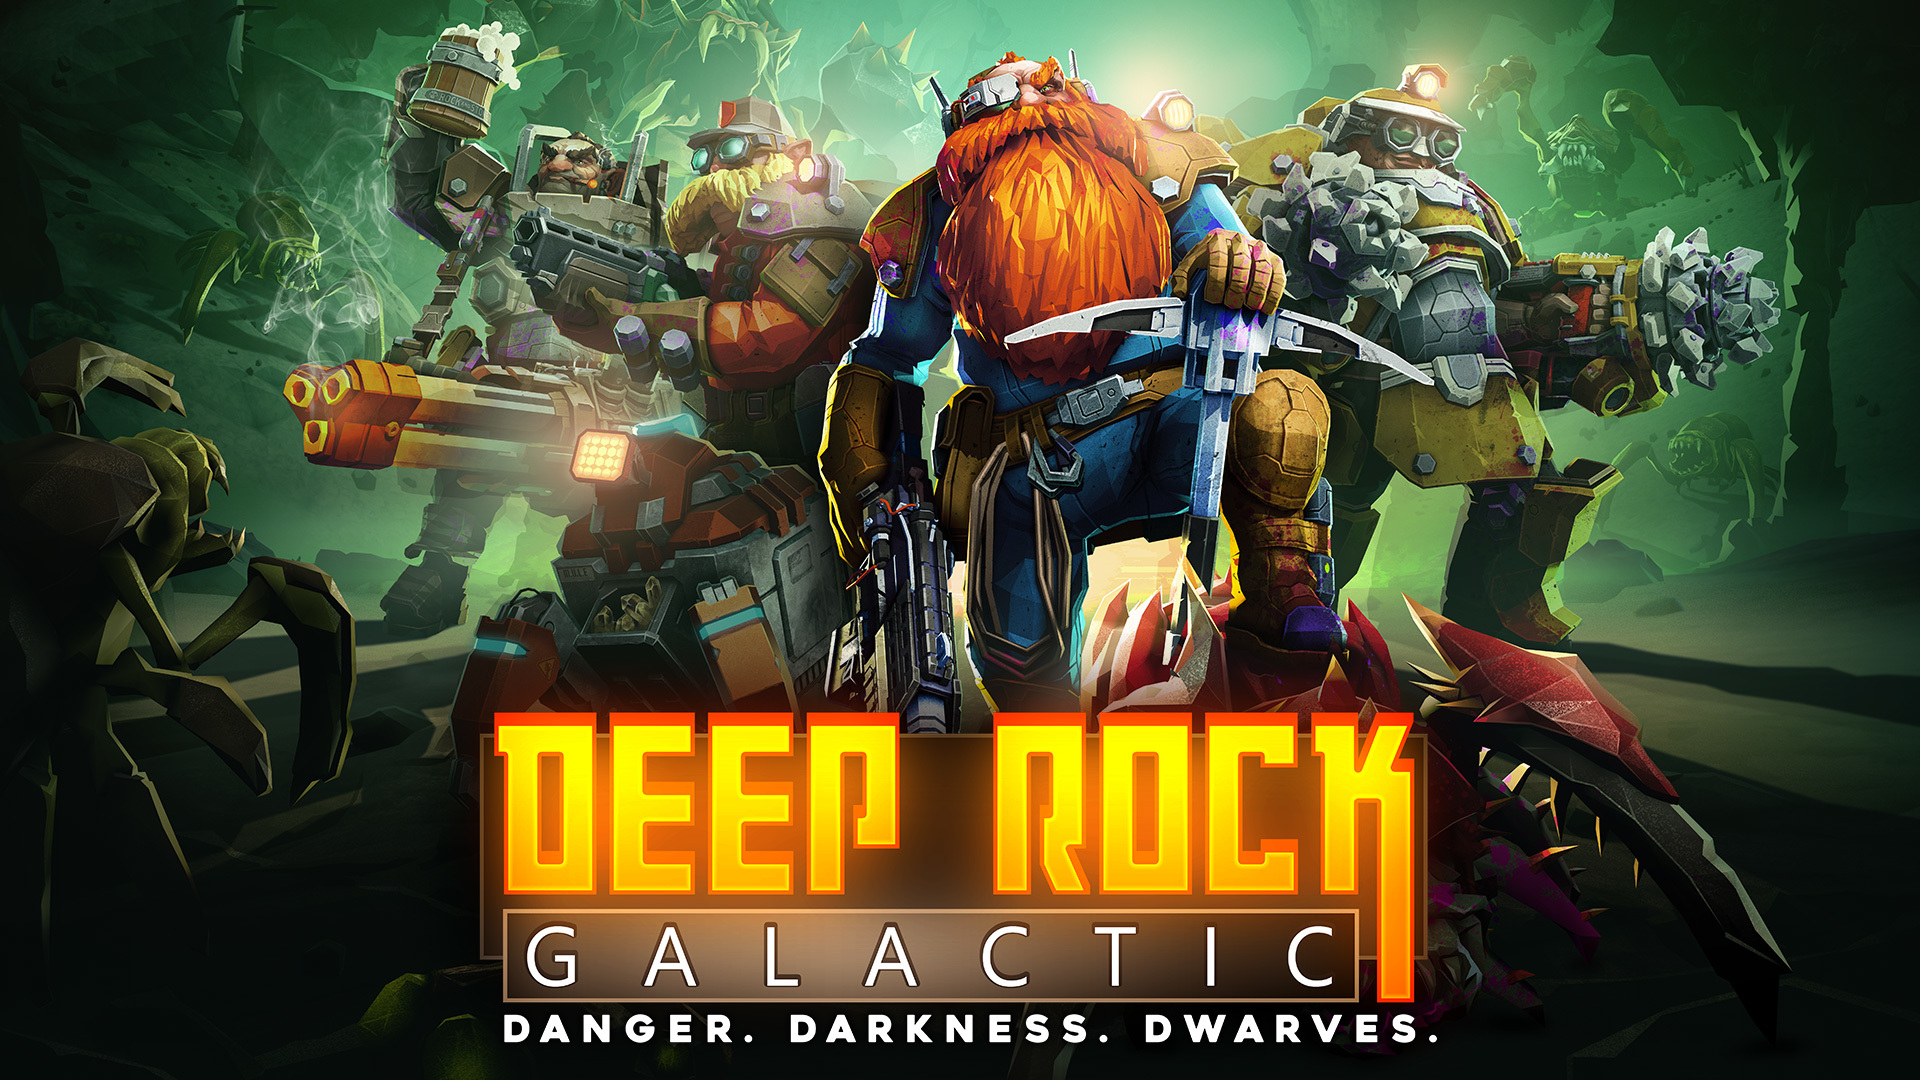 deep rock galactic price download free